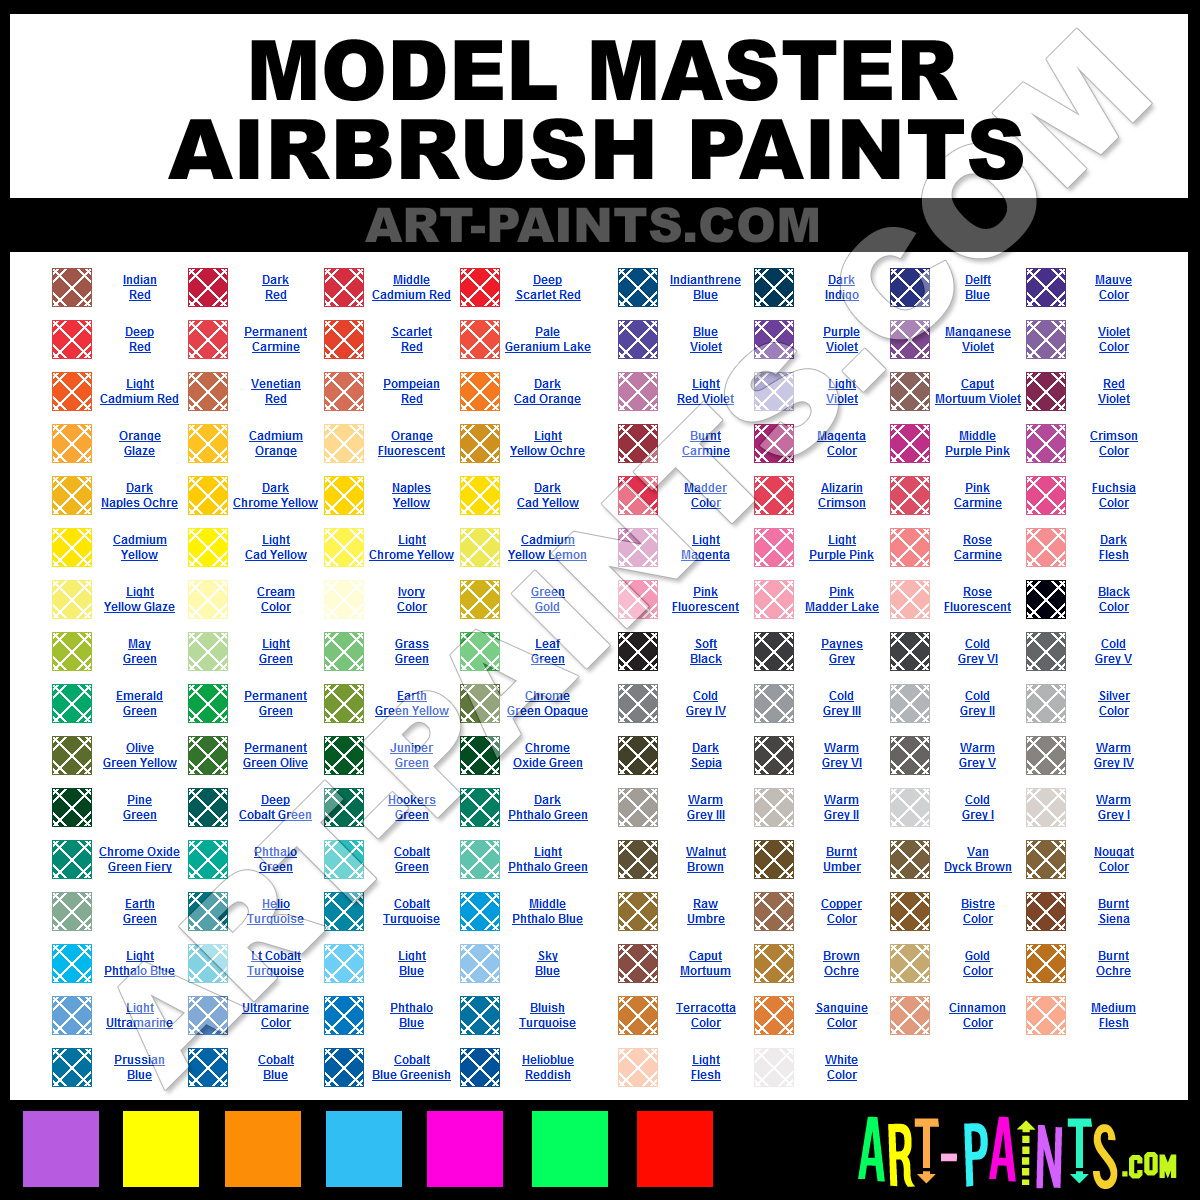 Model Master Spray Paint Chart